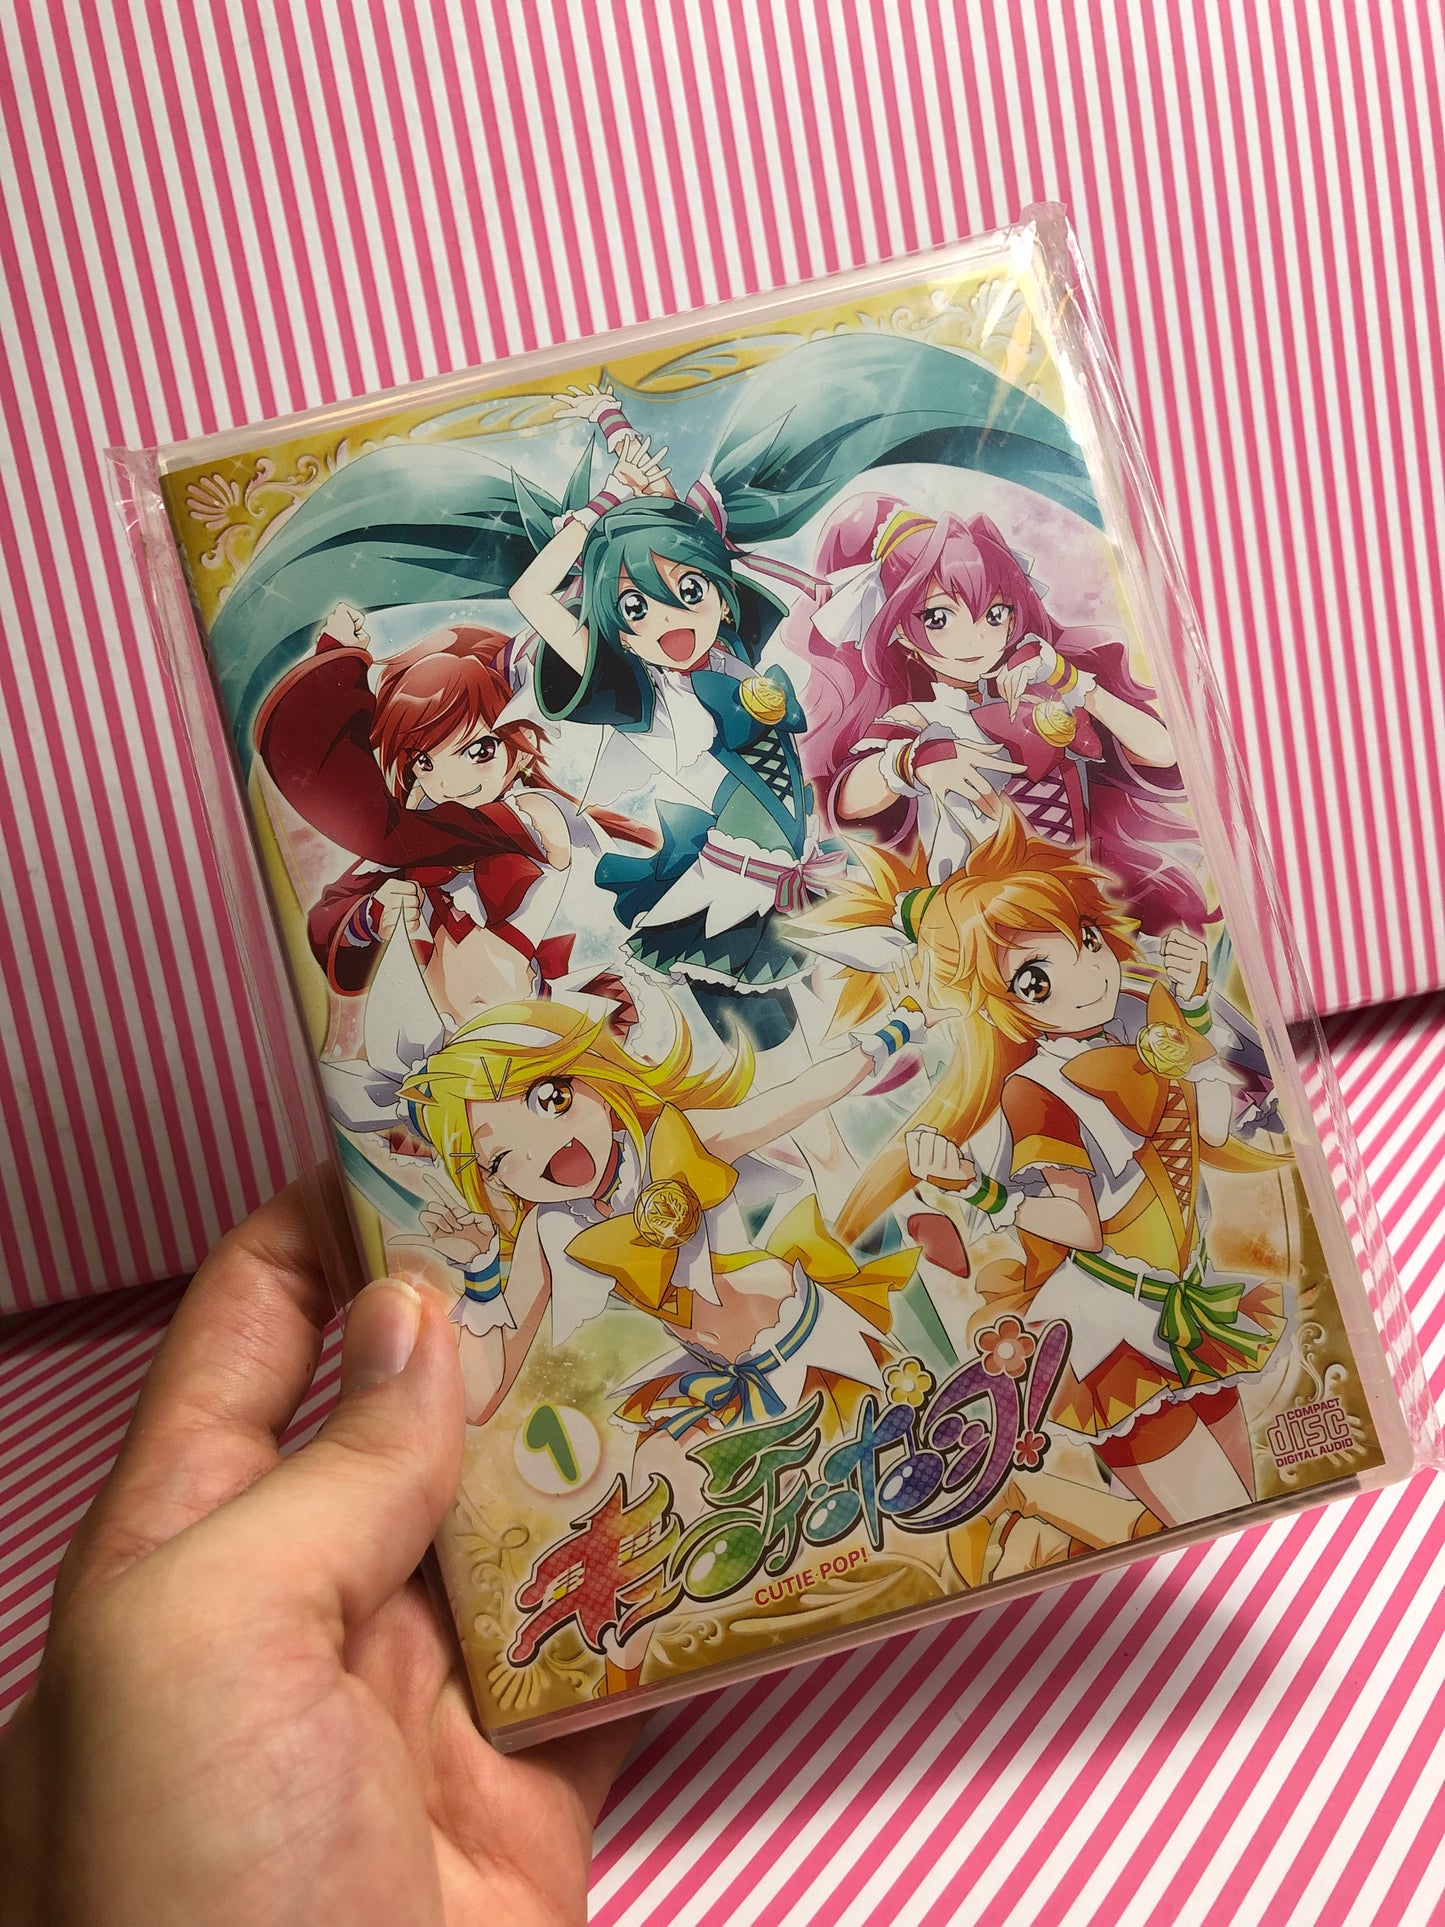 Cutie Pop! Precure Vocaloid Anime DVD